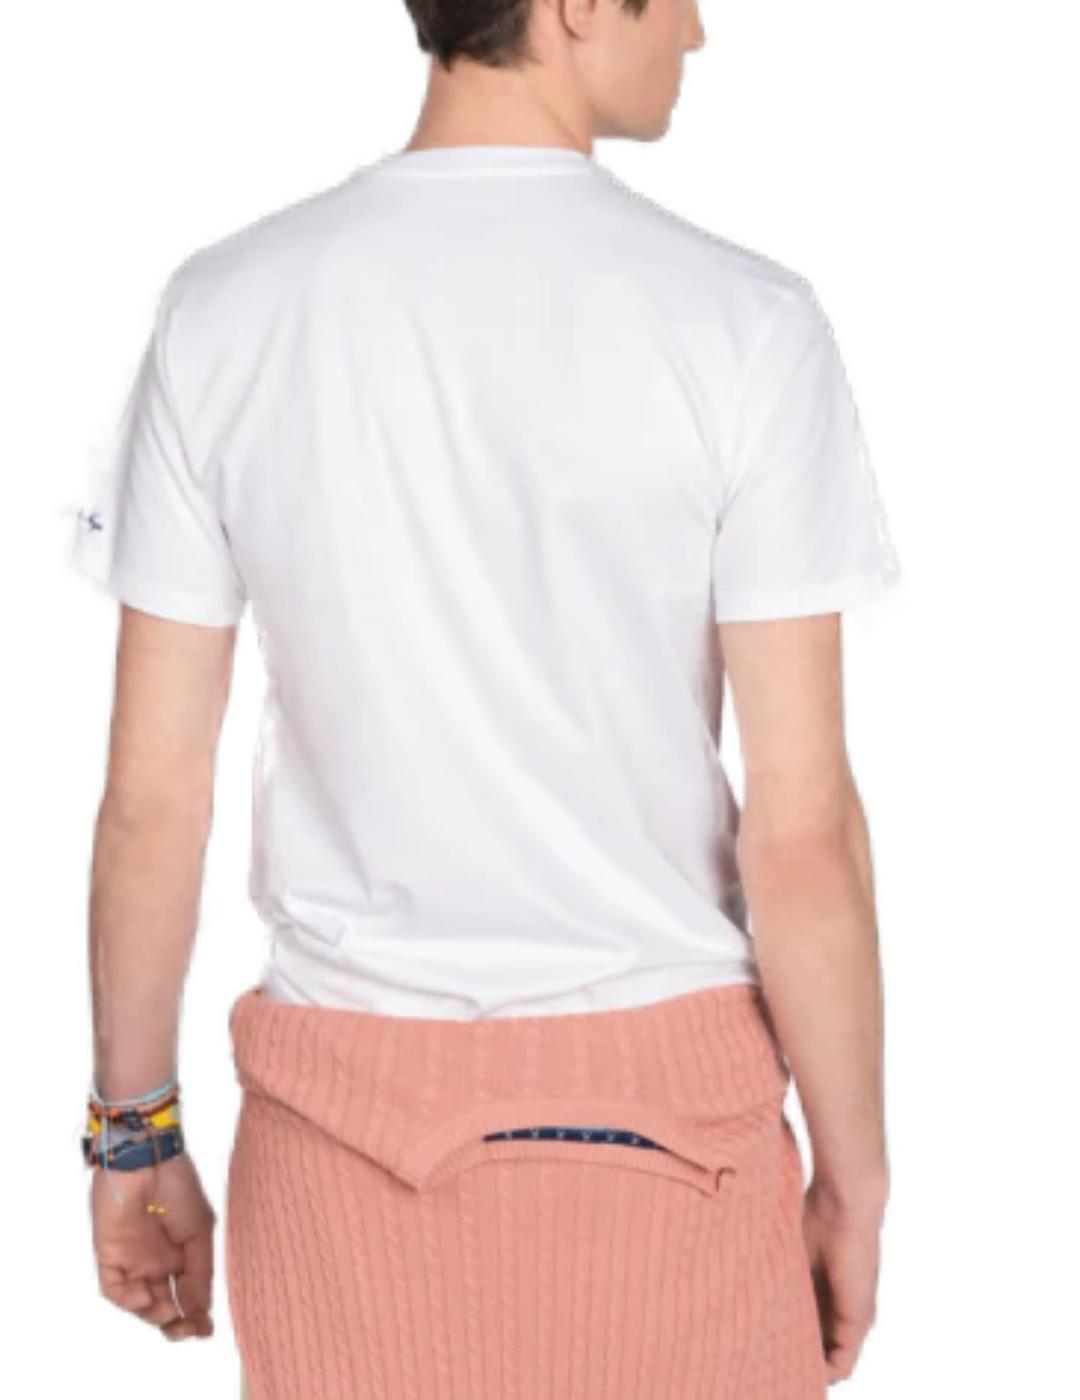 Camiseta Harper Vermont blanco manga corta para hombre